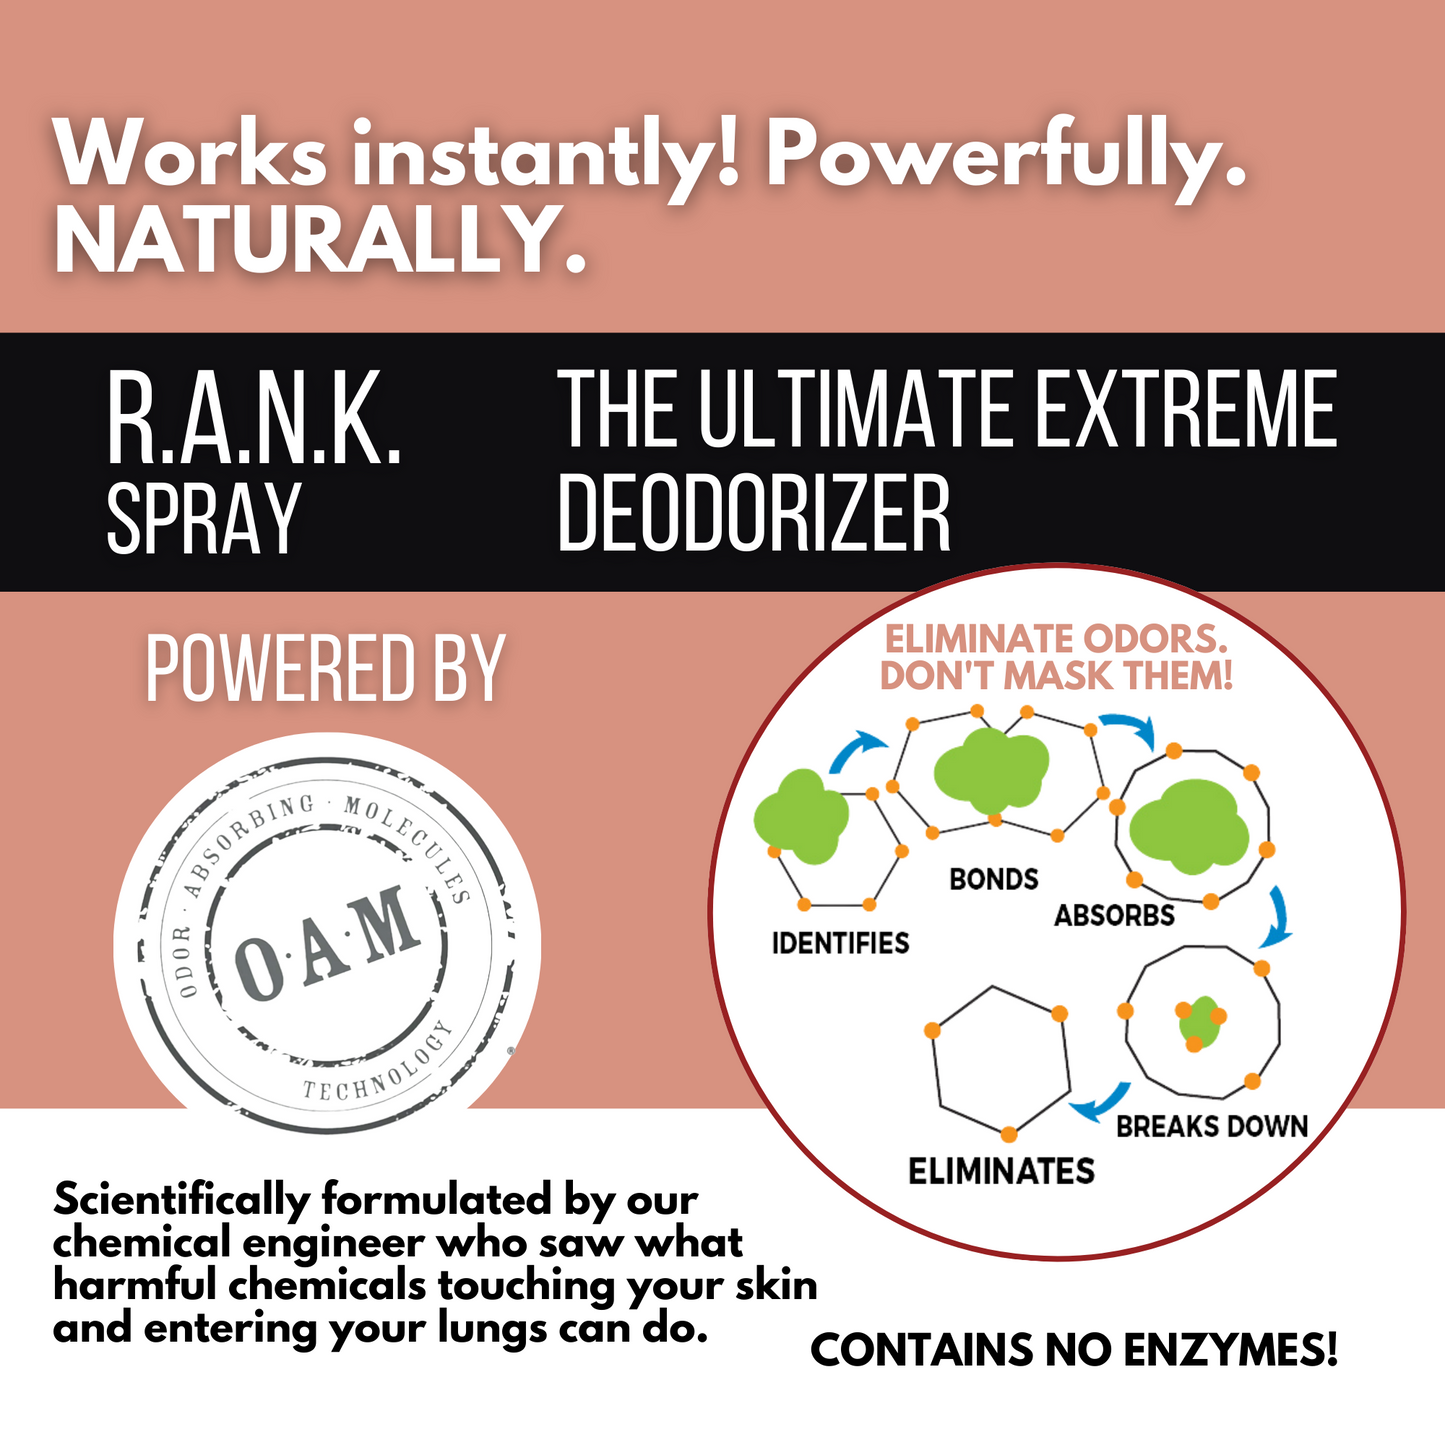 Buy 2 Get 1 Free RANK Natural Odor Eliminating Spray 16 oz